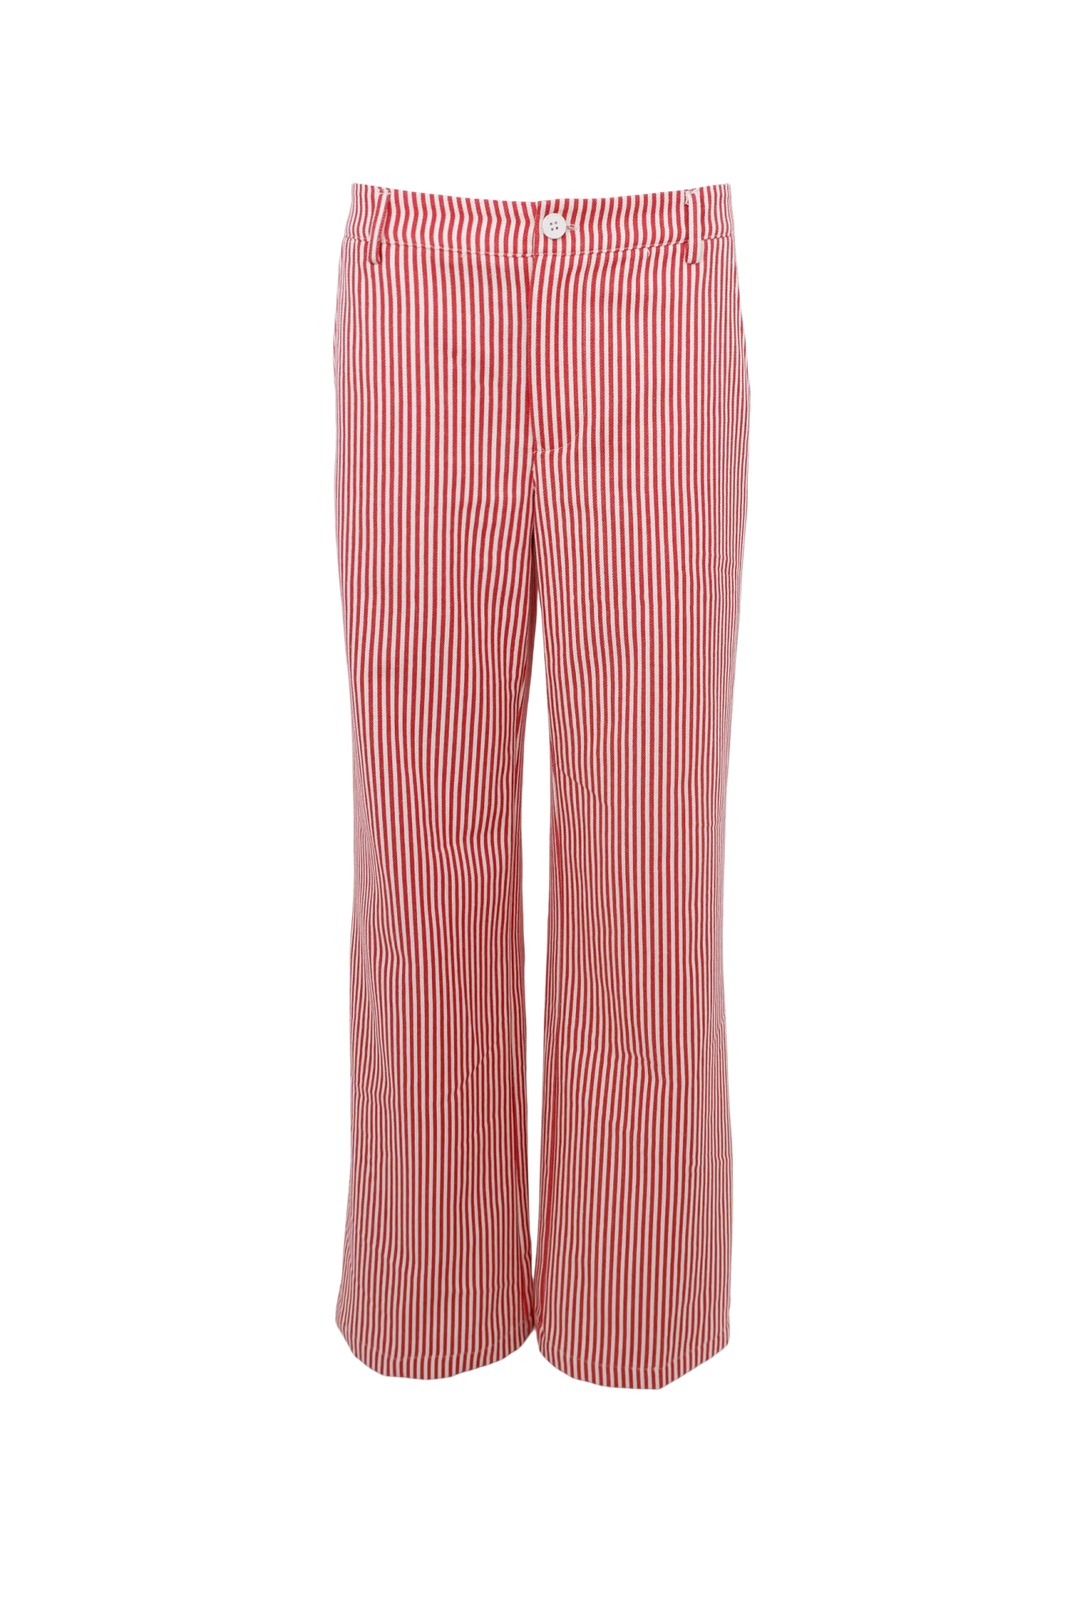 Bukse - striper - rød/off hvite - Many Colors